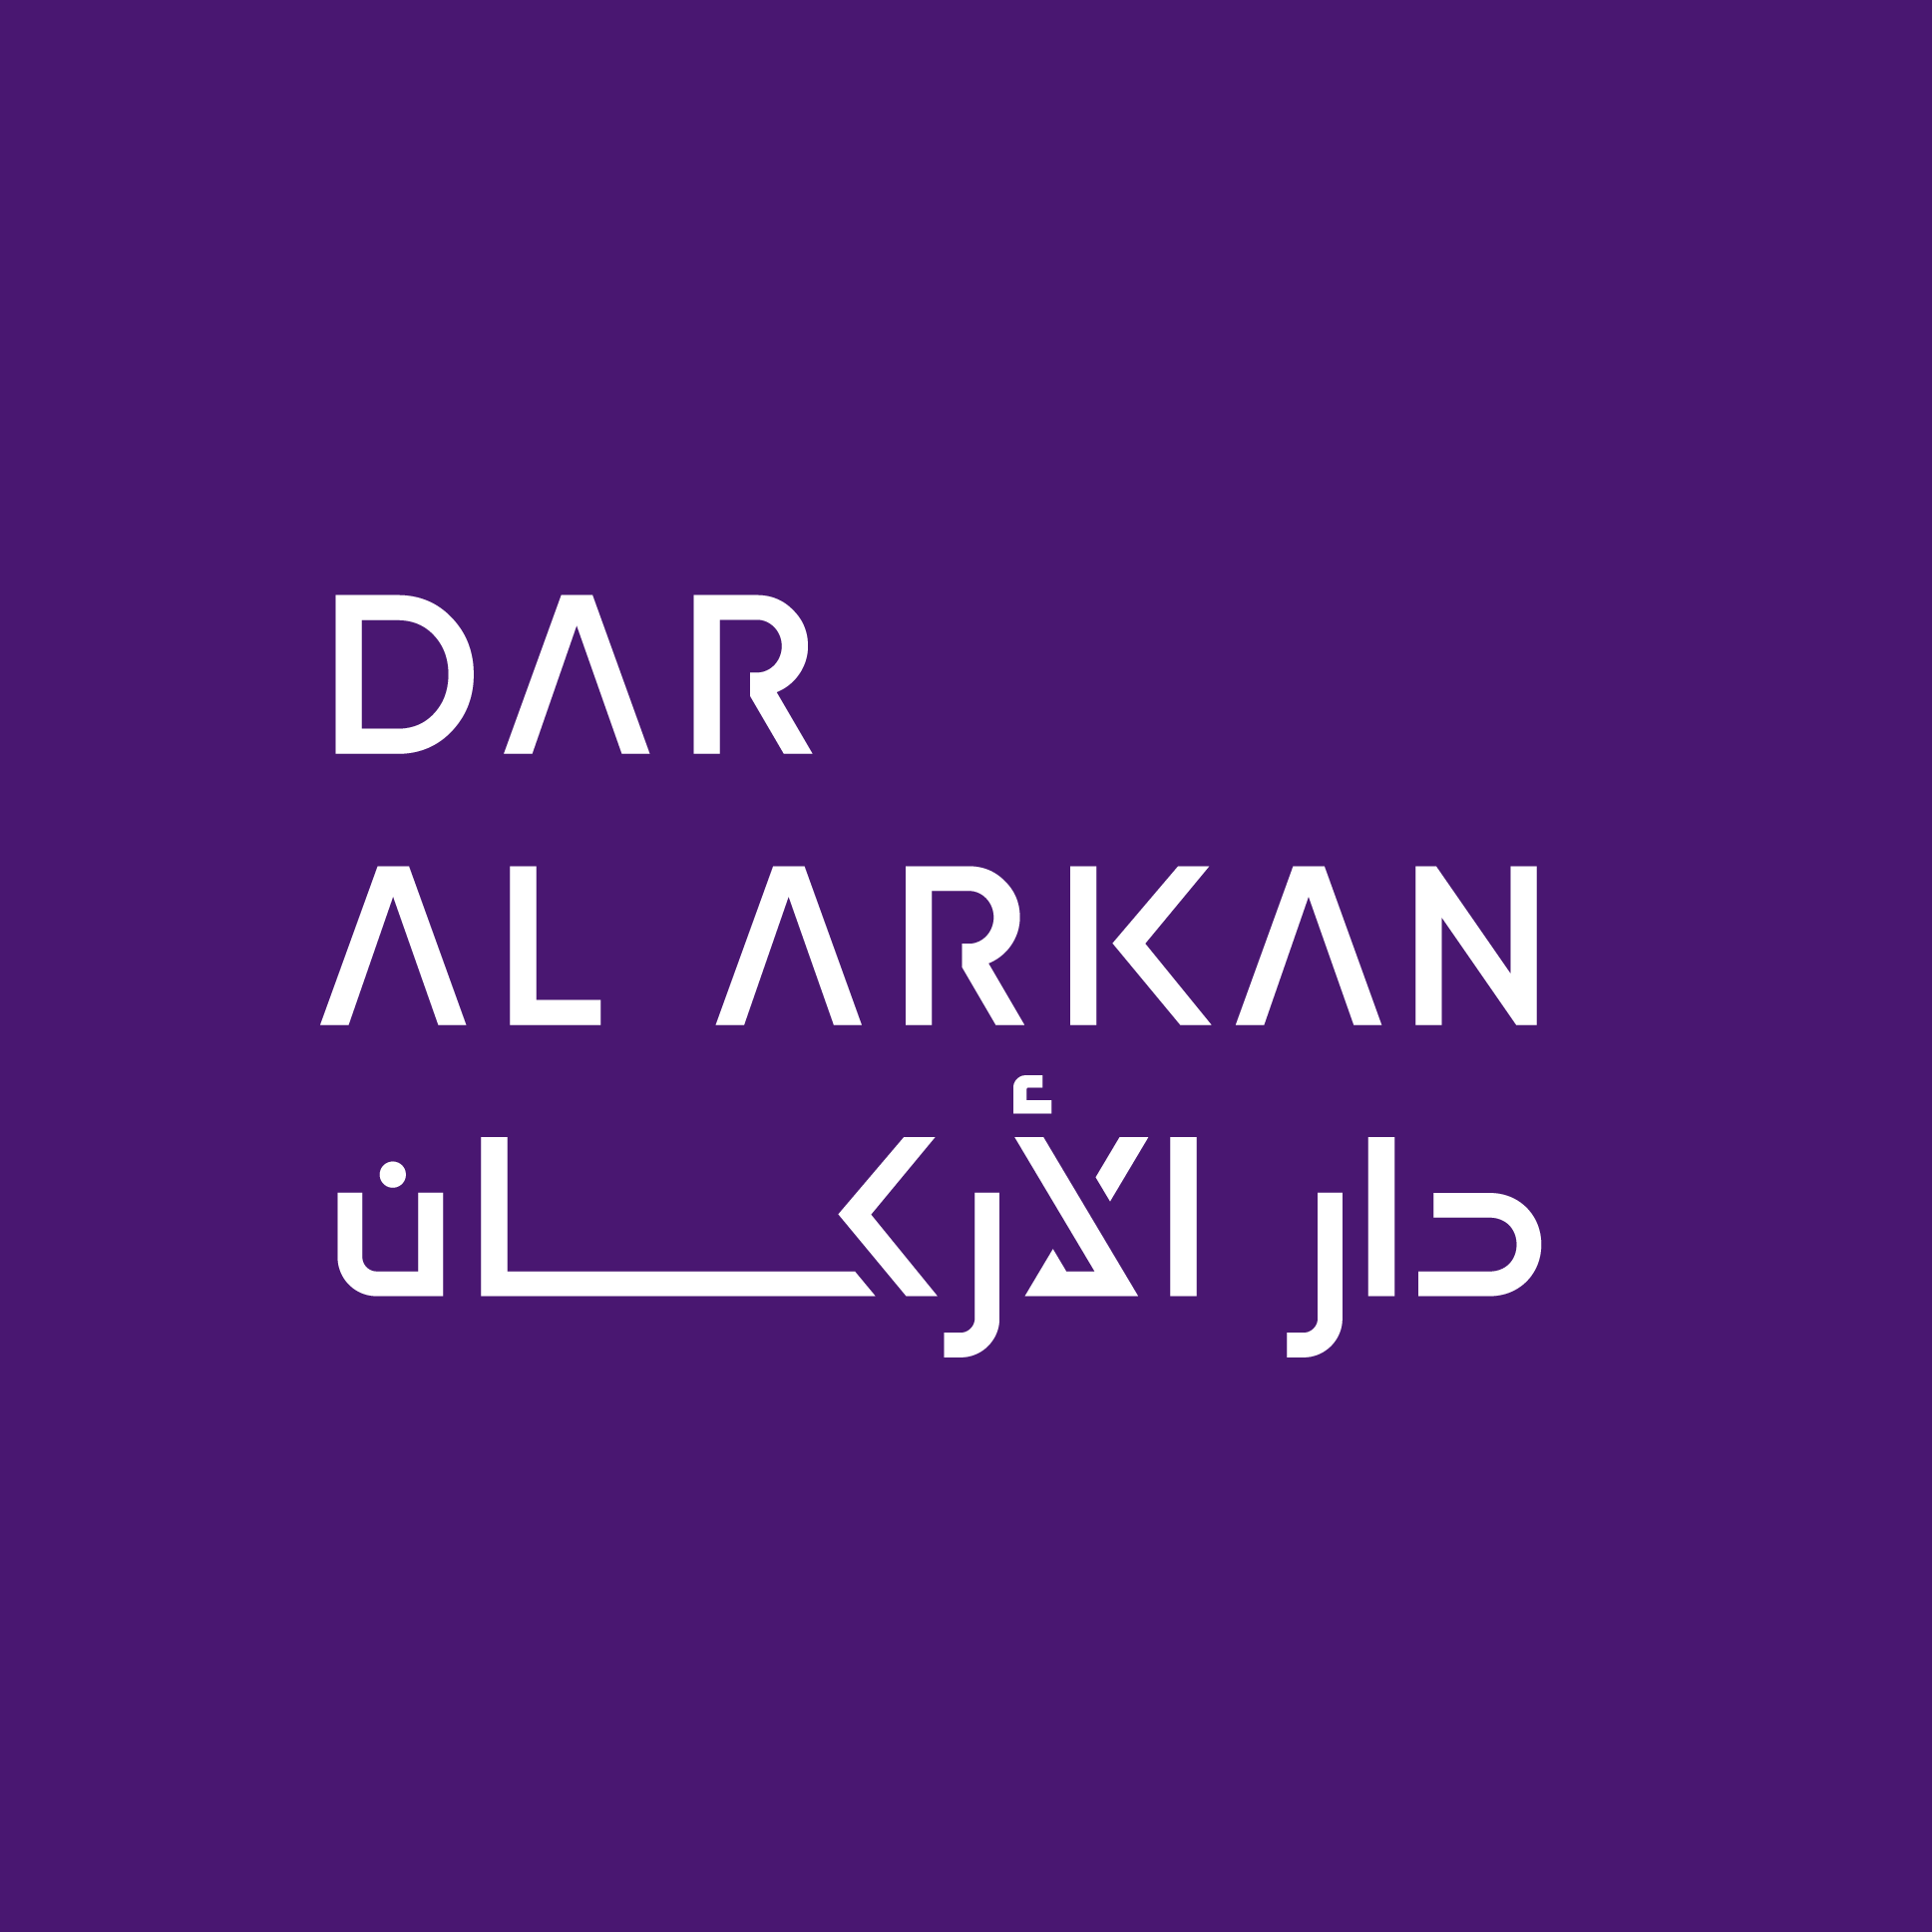 Dar Alarkan - logo